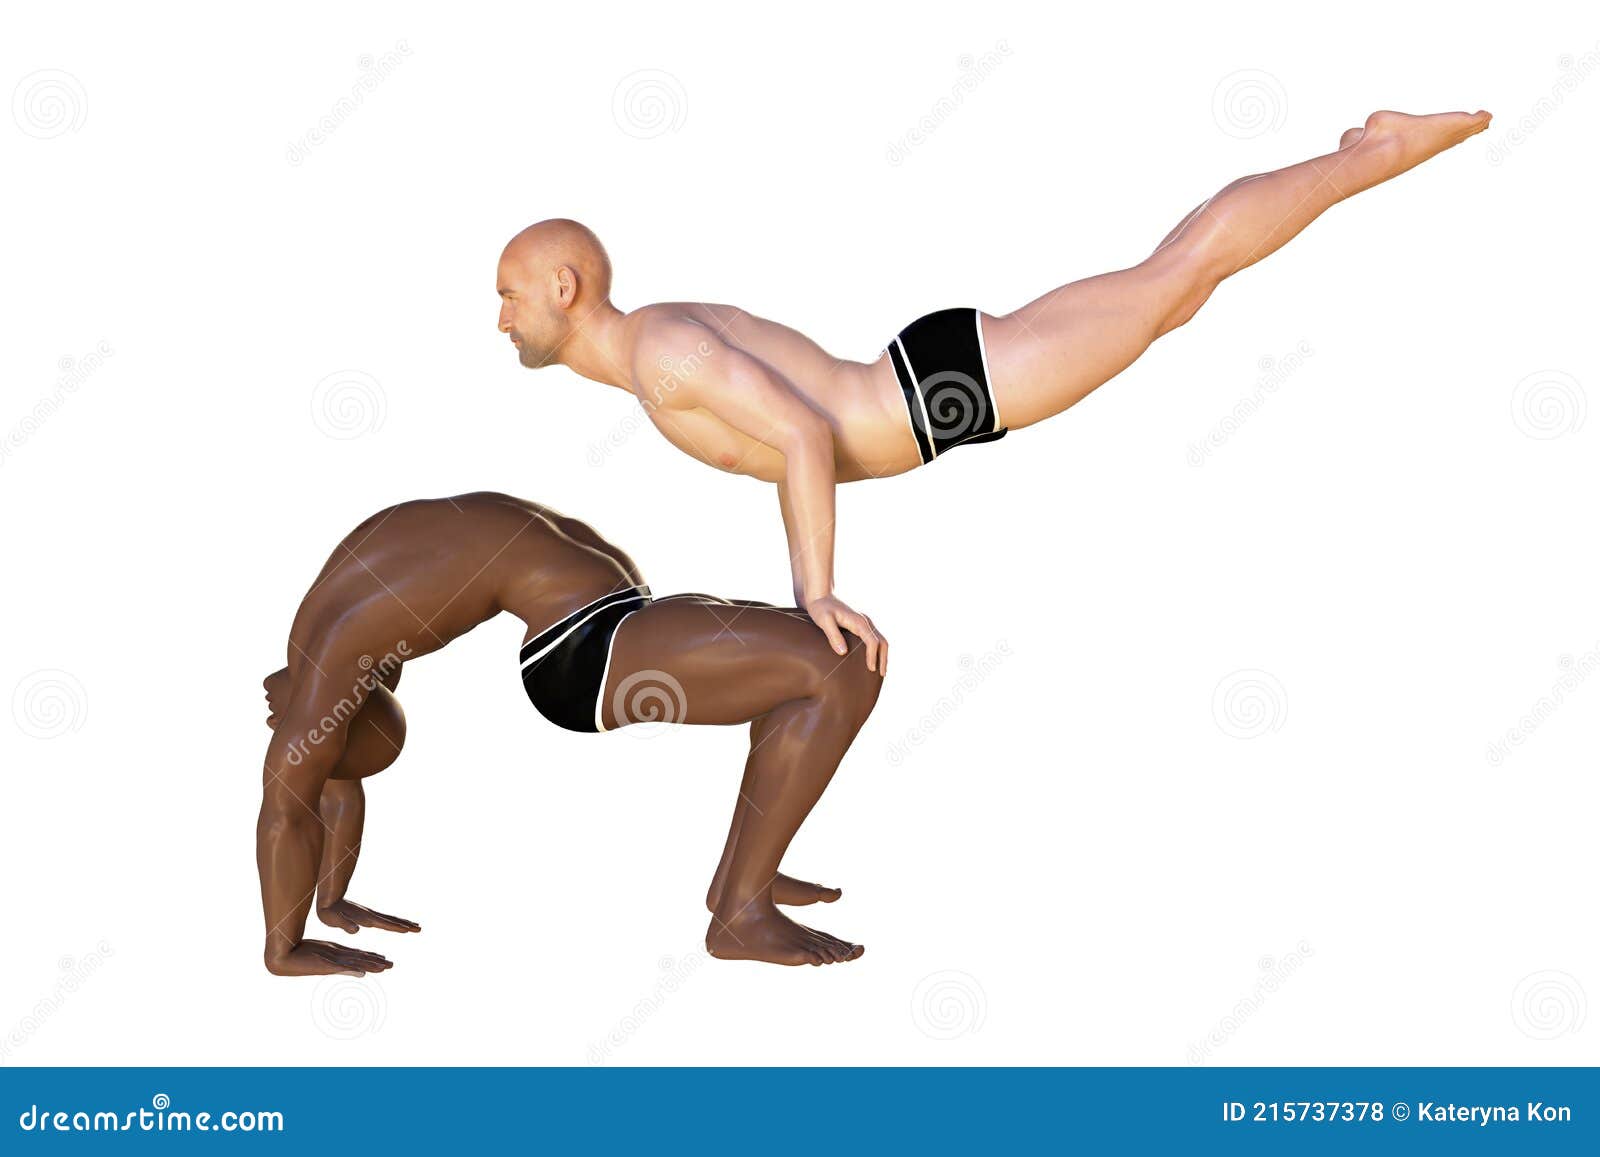 266 Partner Yoga Challenge Images, Stock Photos, 3D objects, & Vectors |  Shutterstock